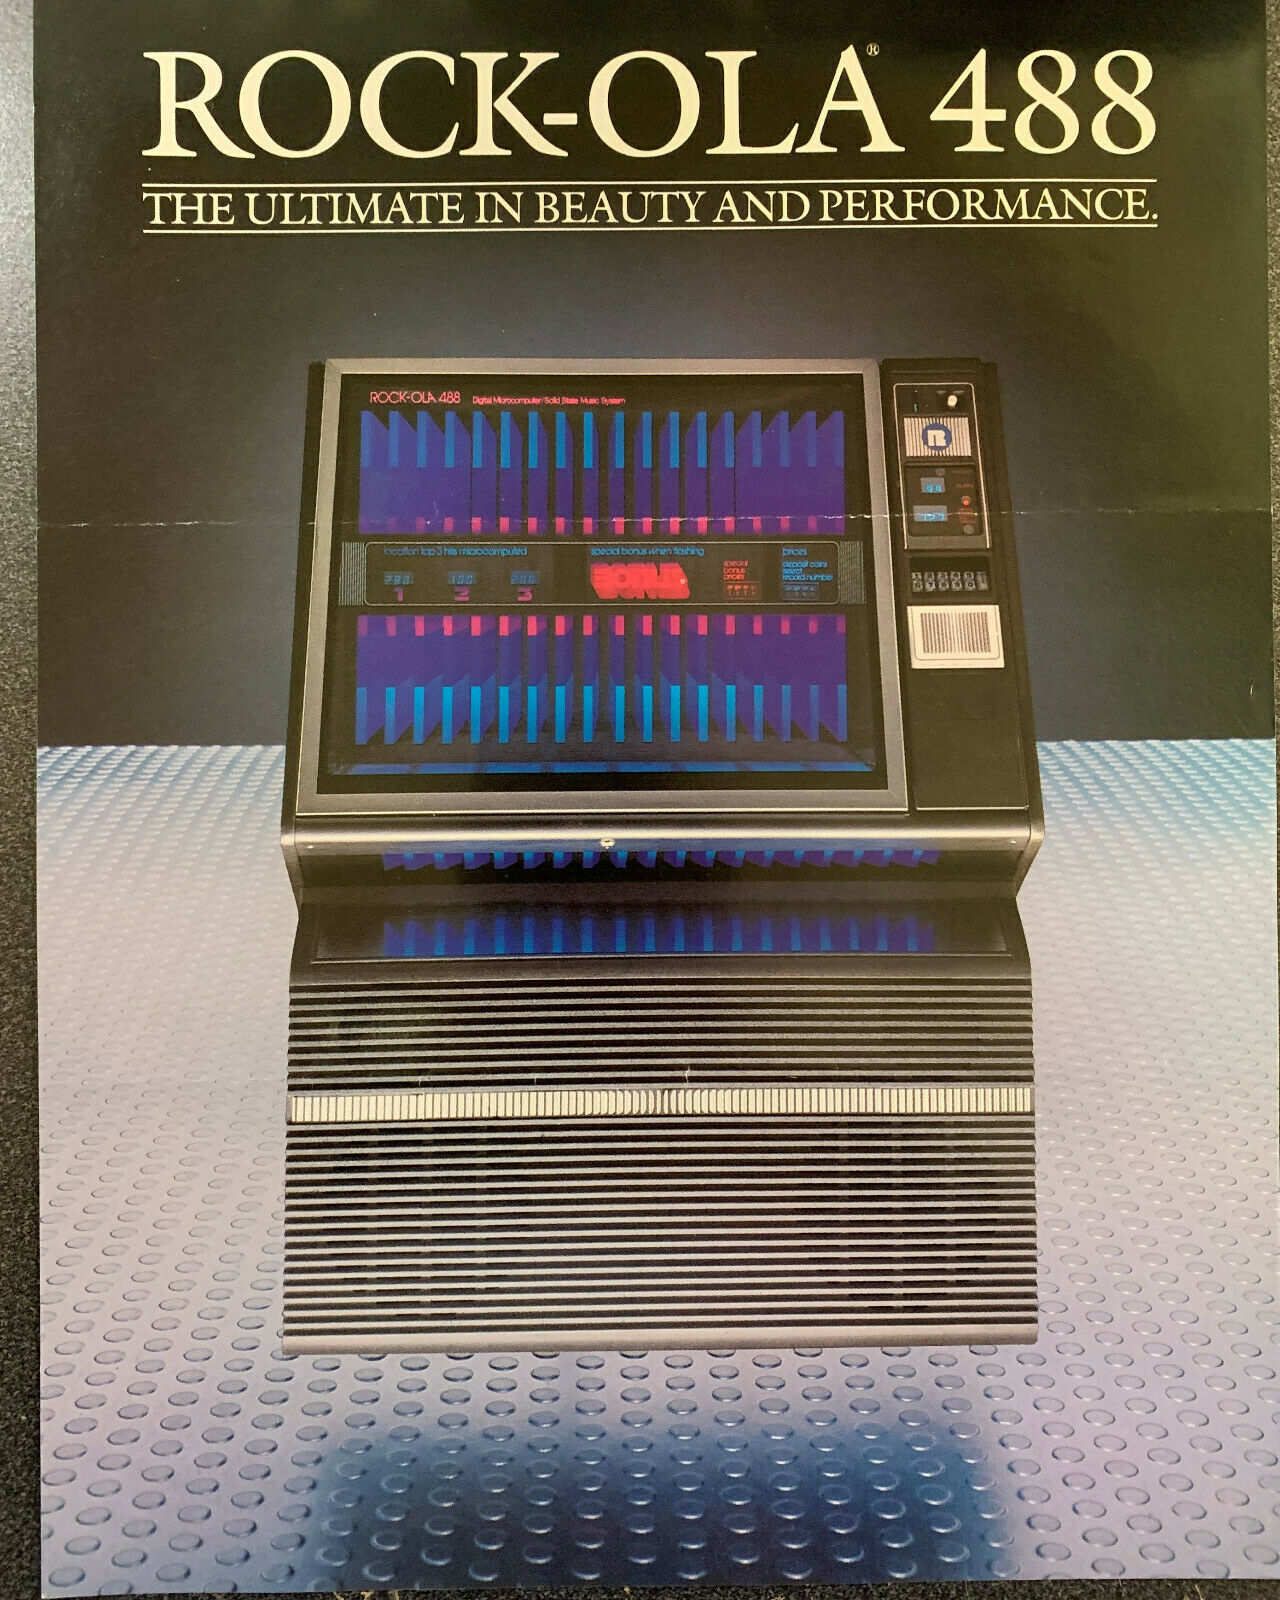 Rock-ola 488 Jukebox Flyer Advertising Brochure 1981 - Good Condition